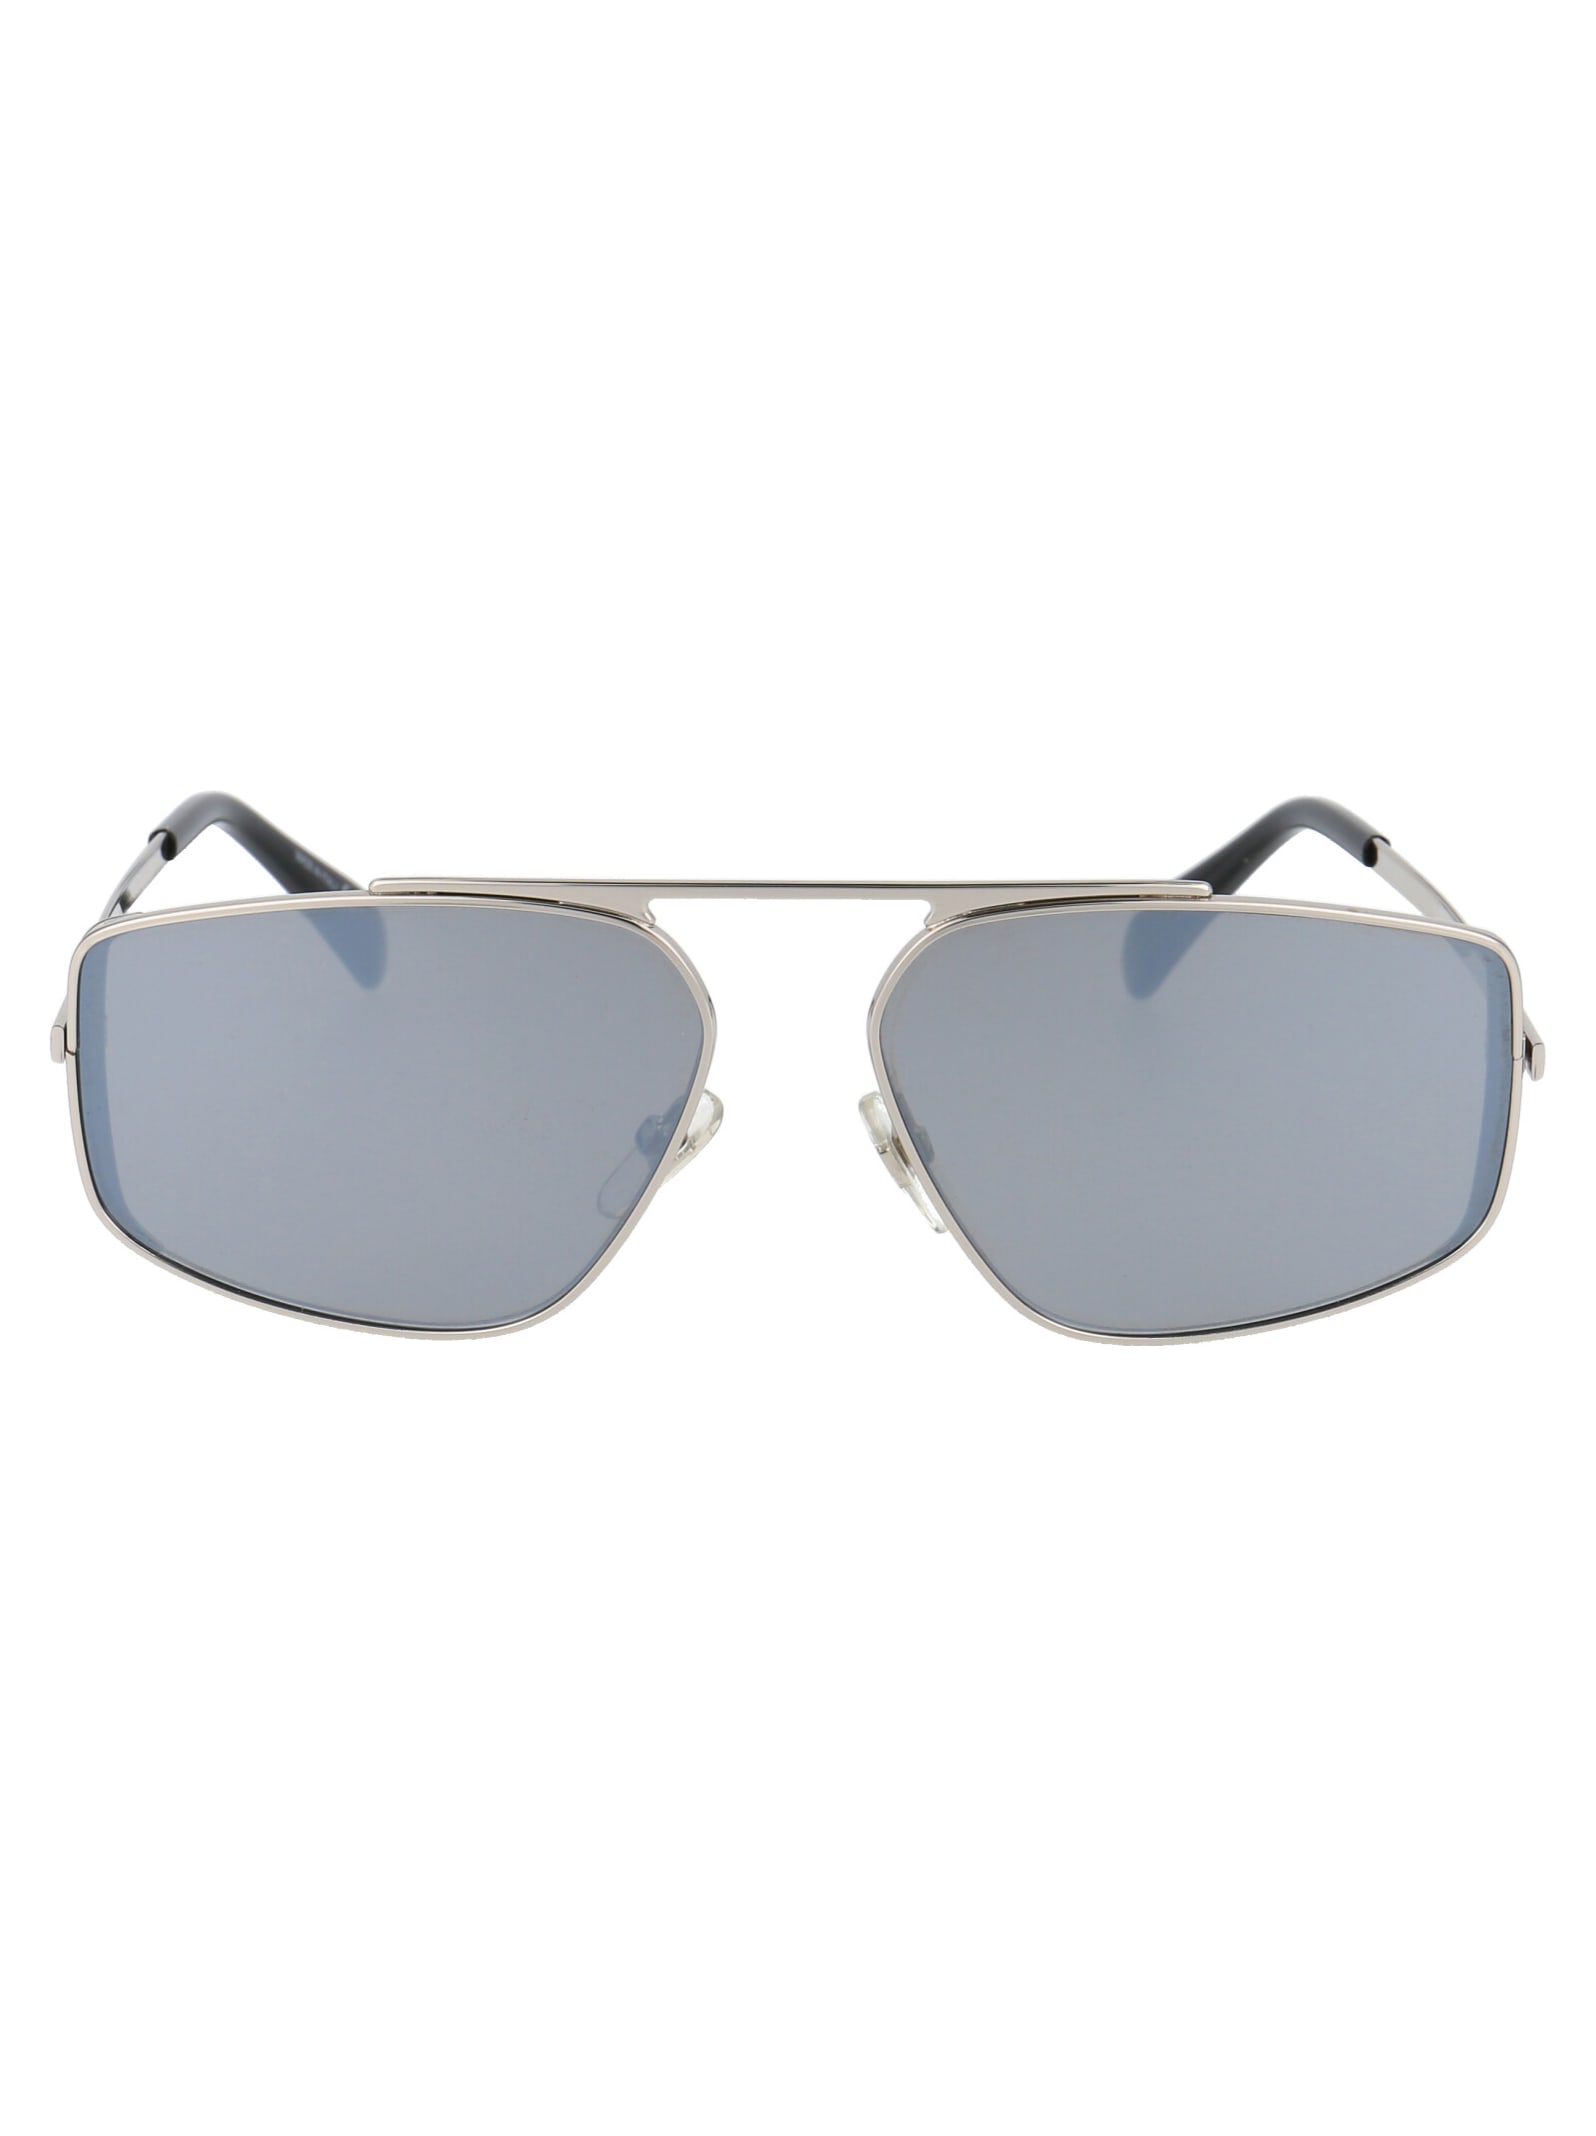 Givenchy Gv 7127/s Sunglasses In 010t4 Palladium